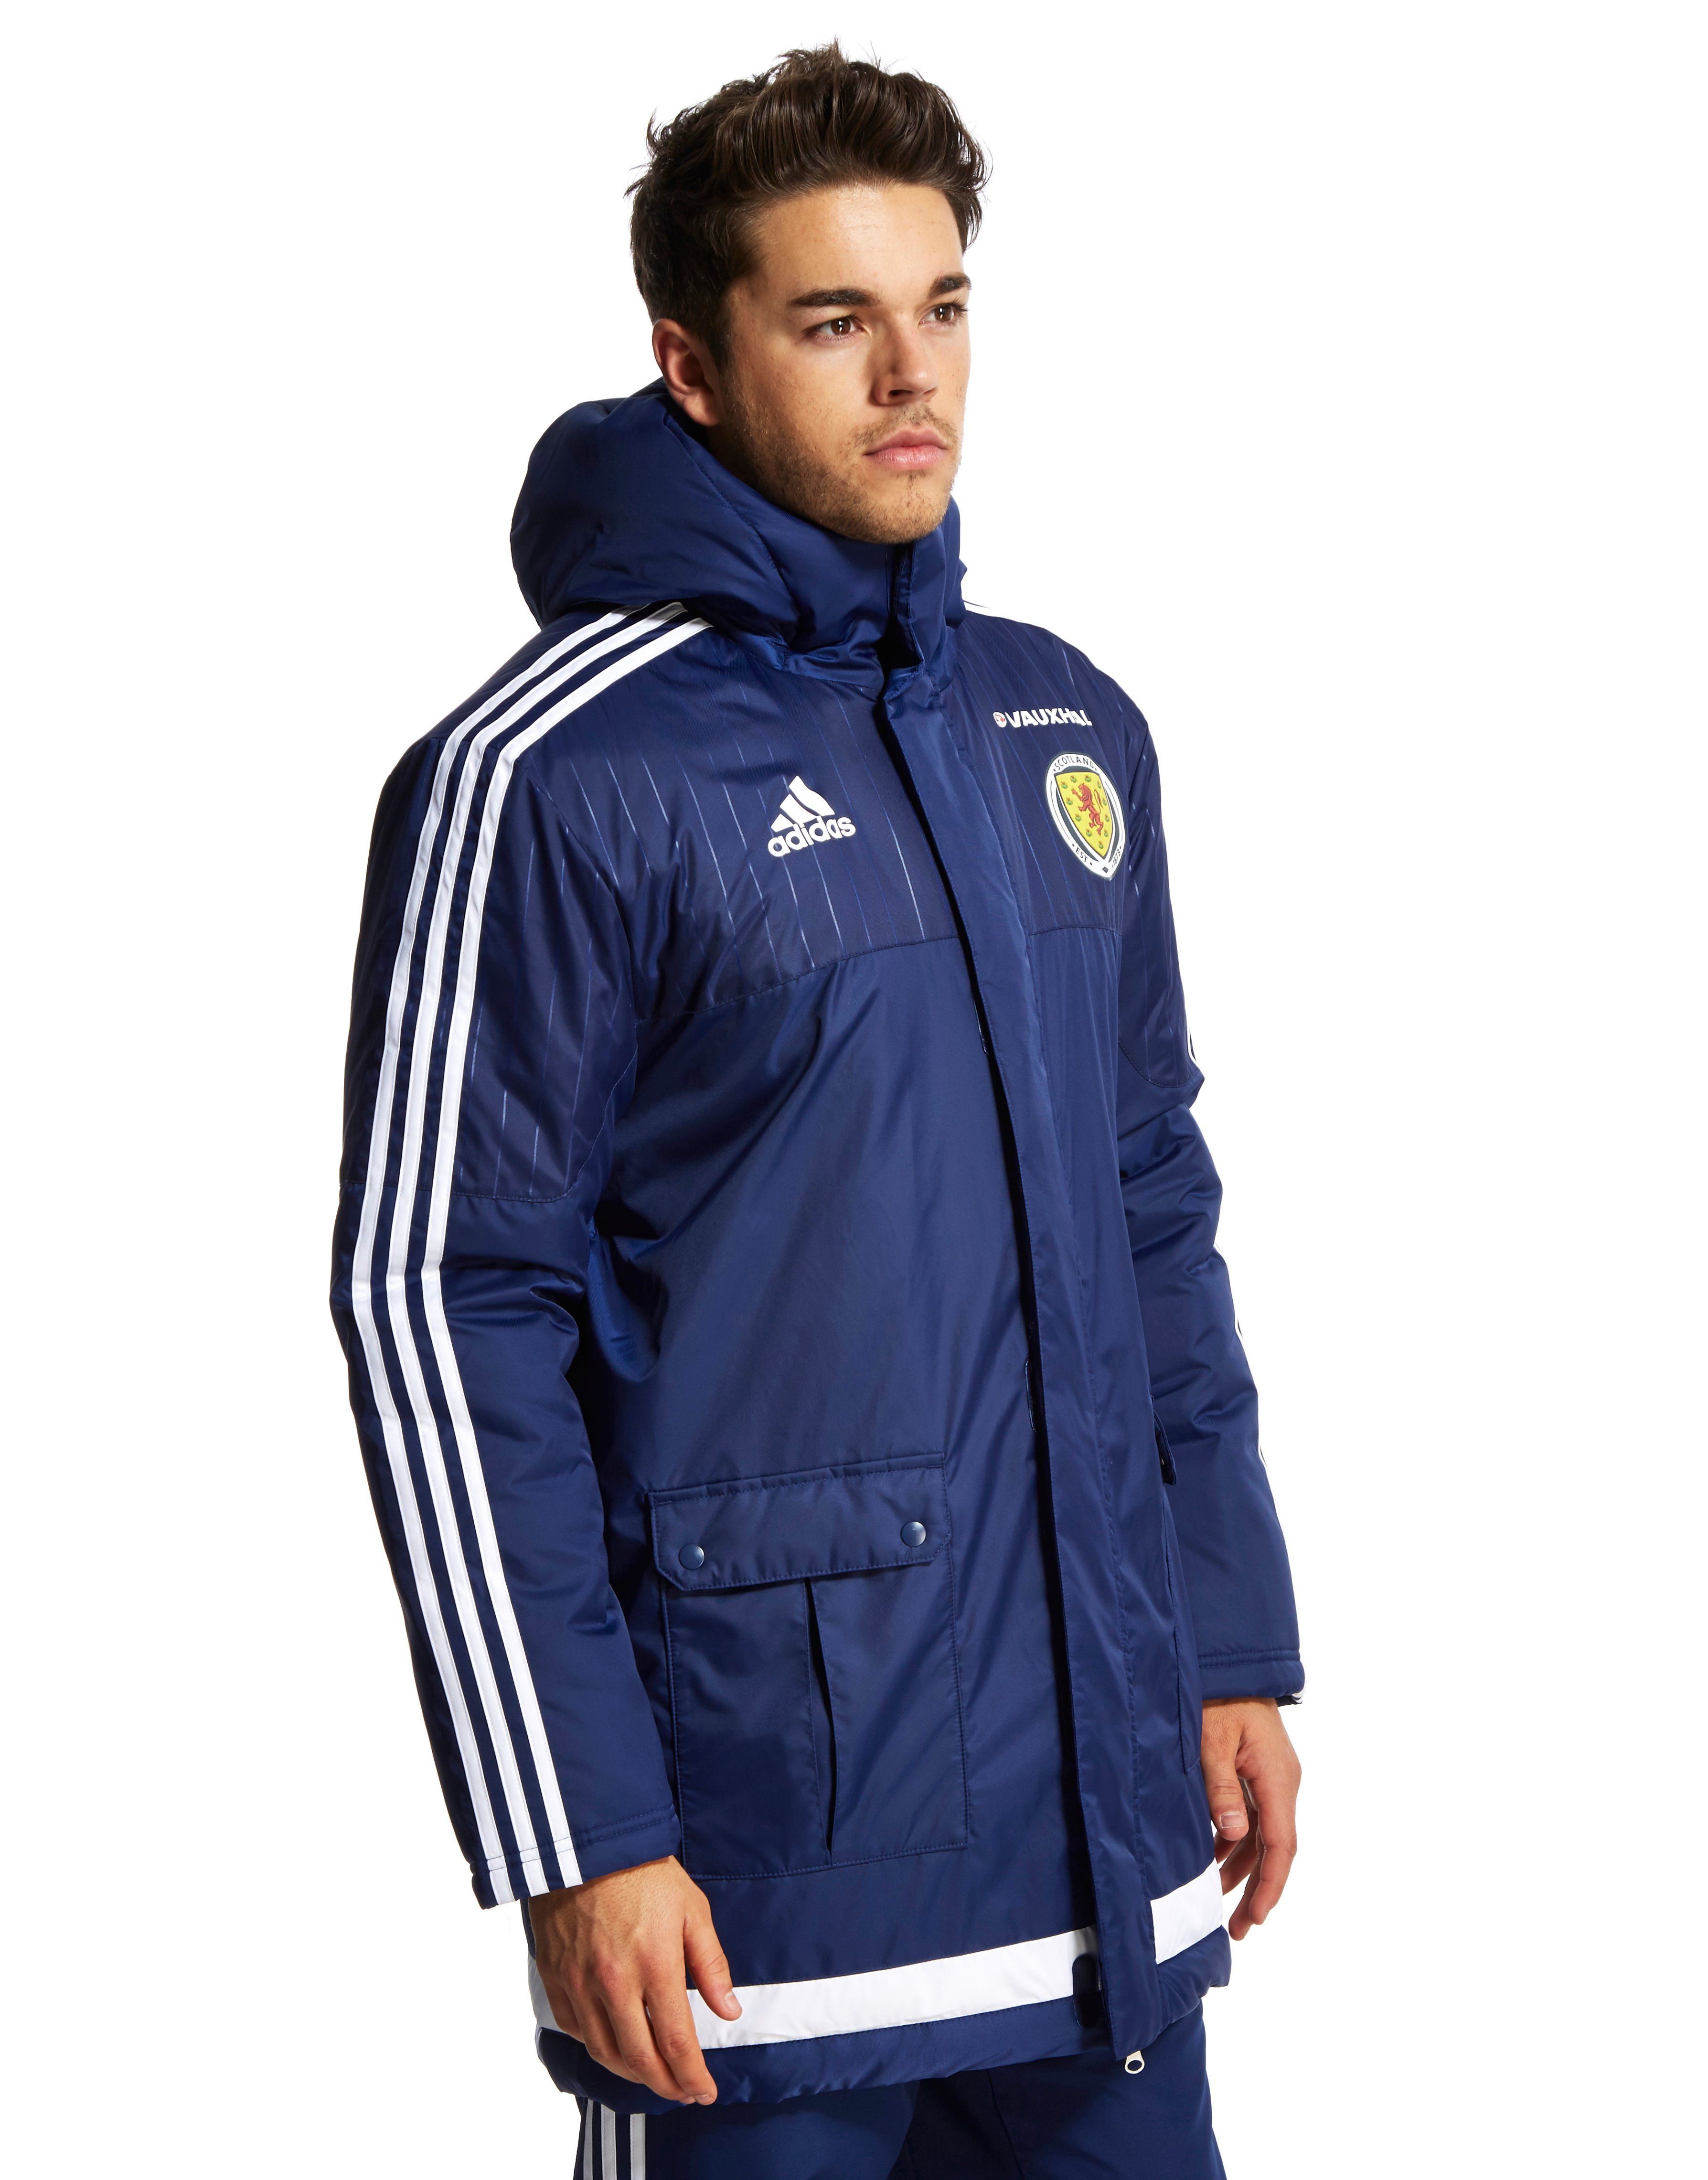 Adidas Scotland FA 2015/16 Stadium Jacket  JD Sports